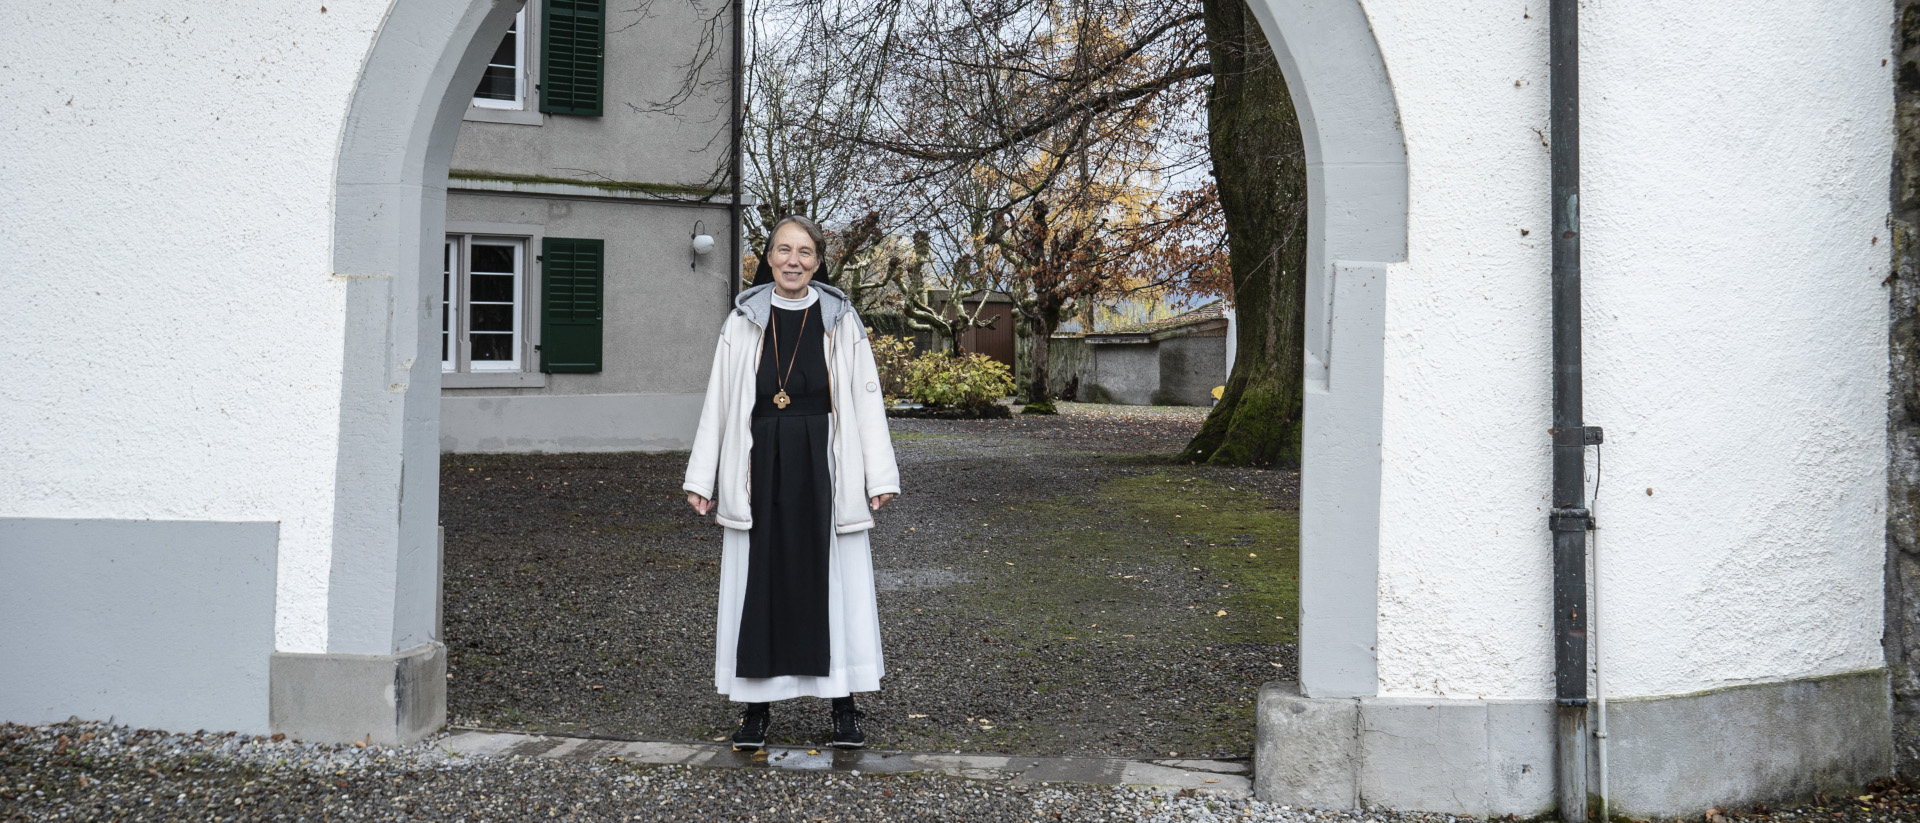 Äbtissin Monika Thumm im Eingang des Klosters Mariazell-Wurmsbach